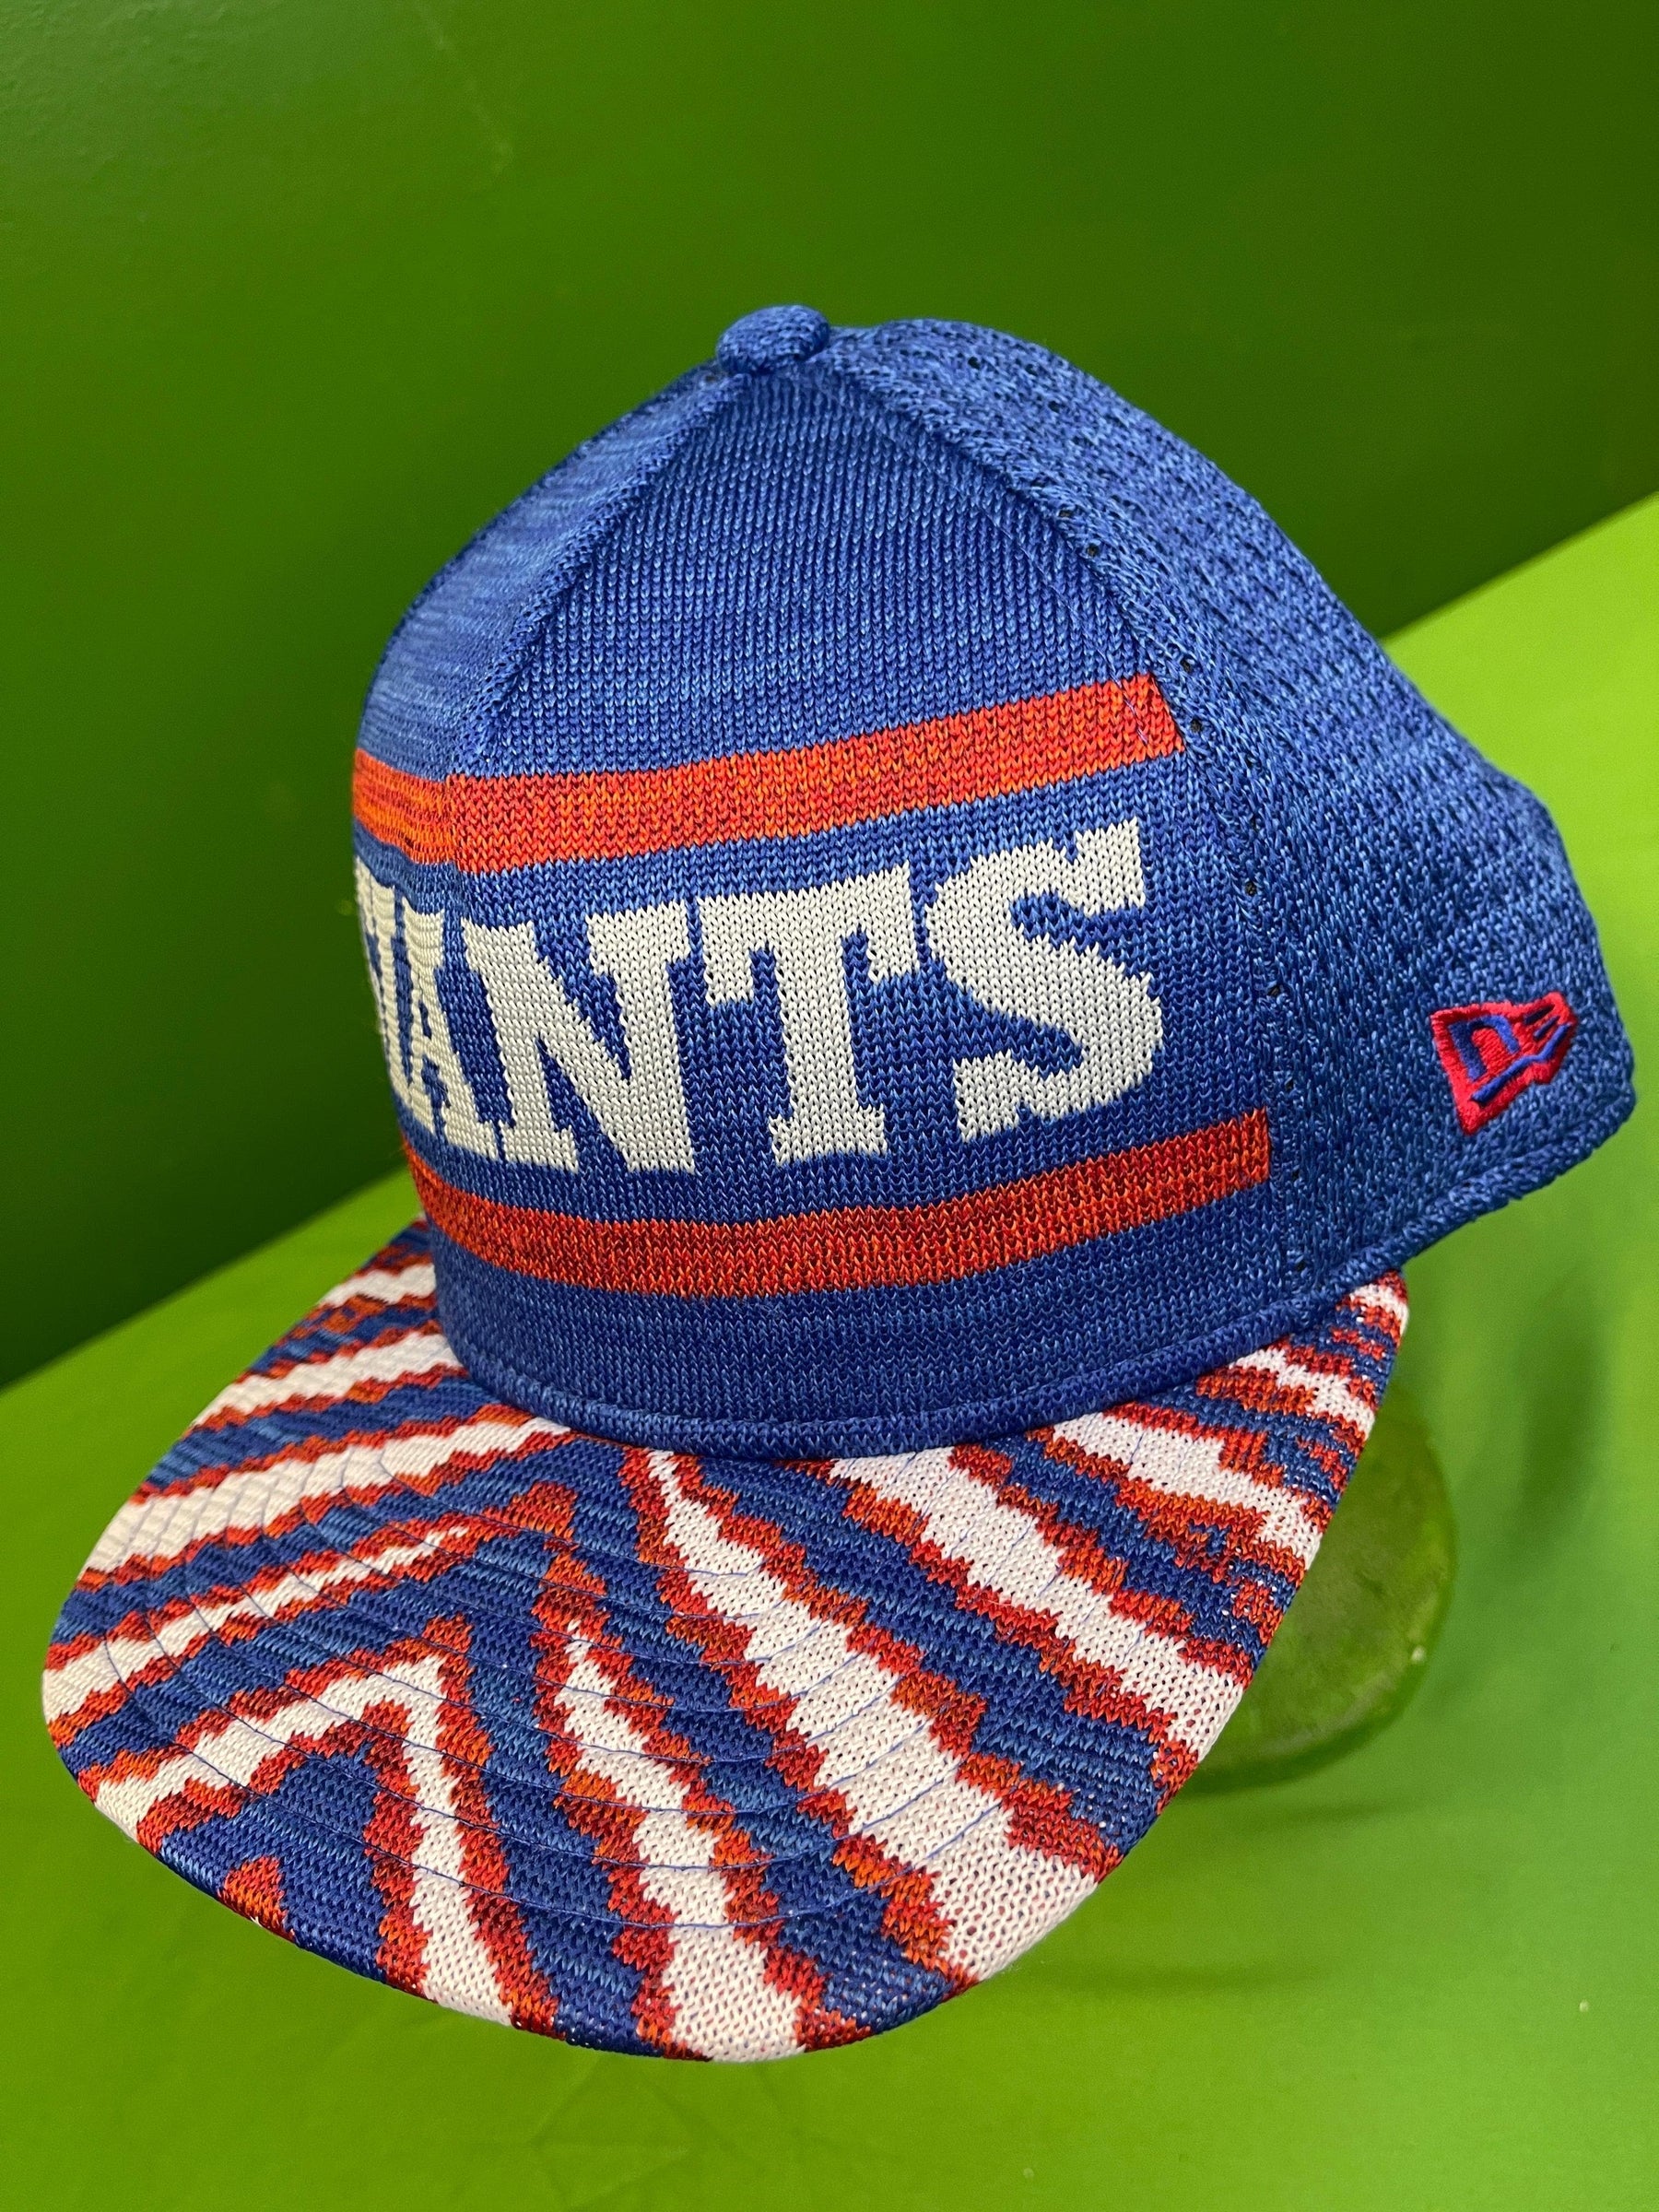 NFL New York Giants New Era 9FIFTY Knit Snapback Hat/Cap OSFM NWT